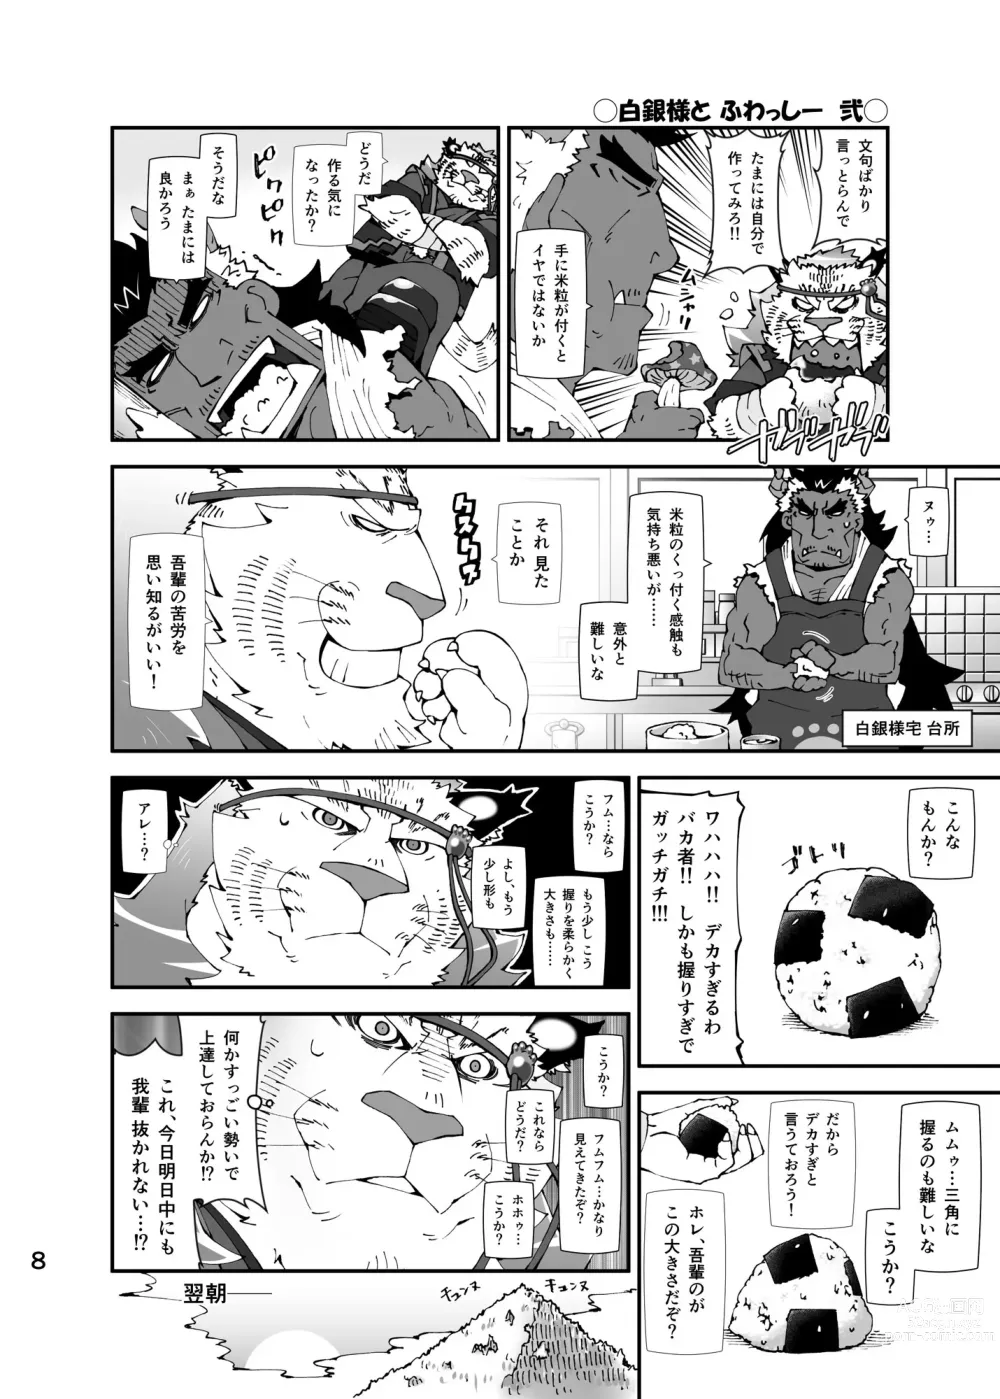 Page 7 of doujinshi NONKEMO GO